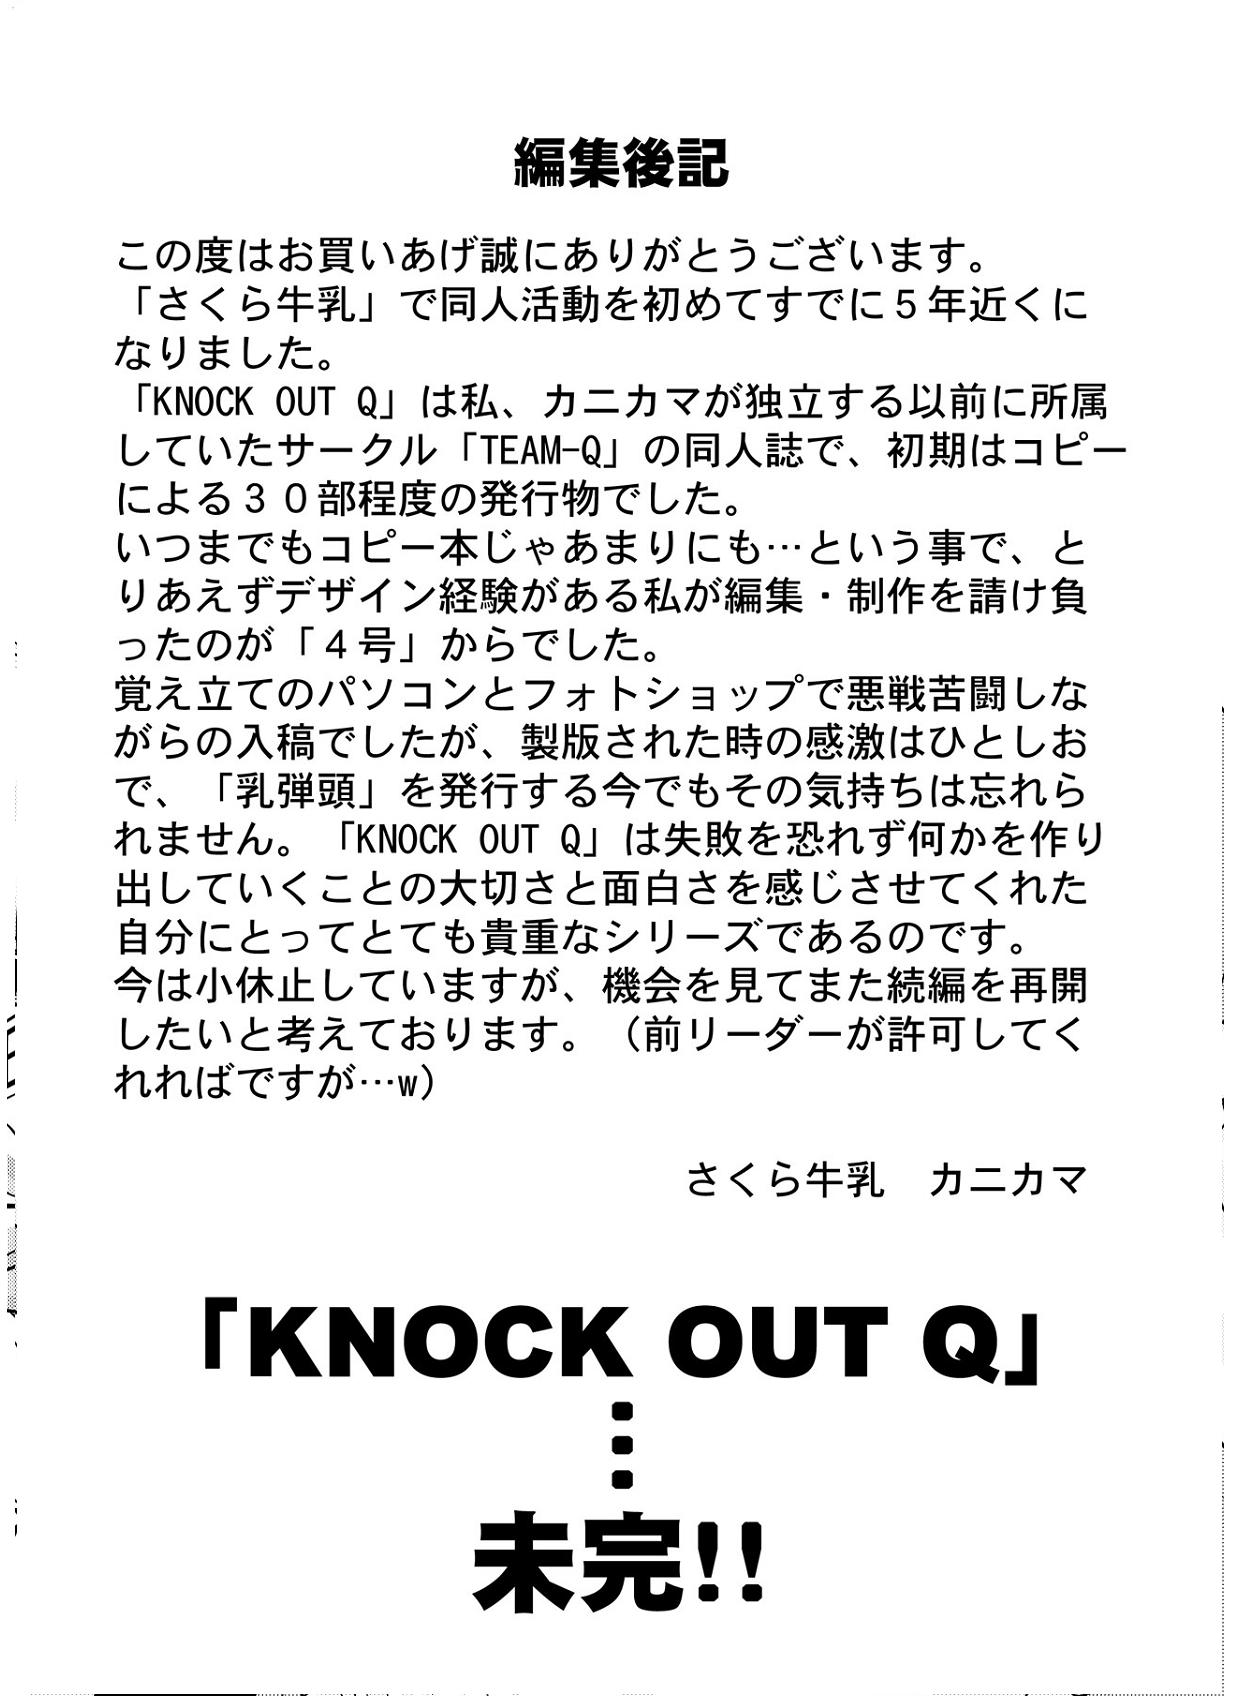 Knockout-Q 13